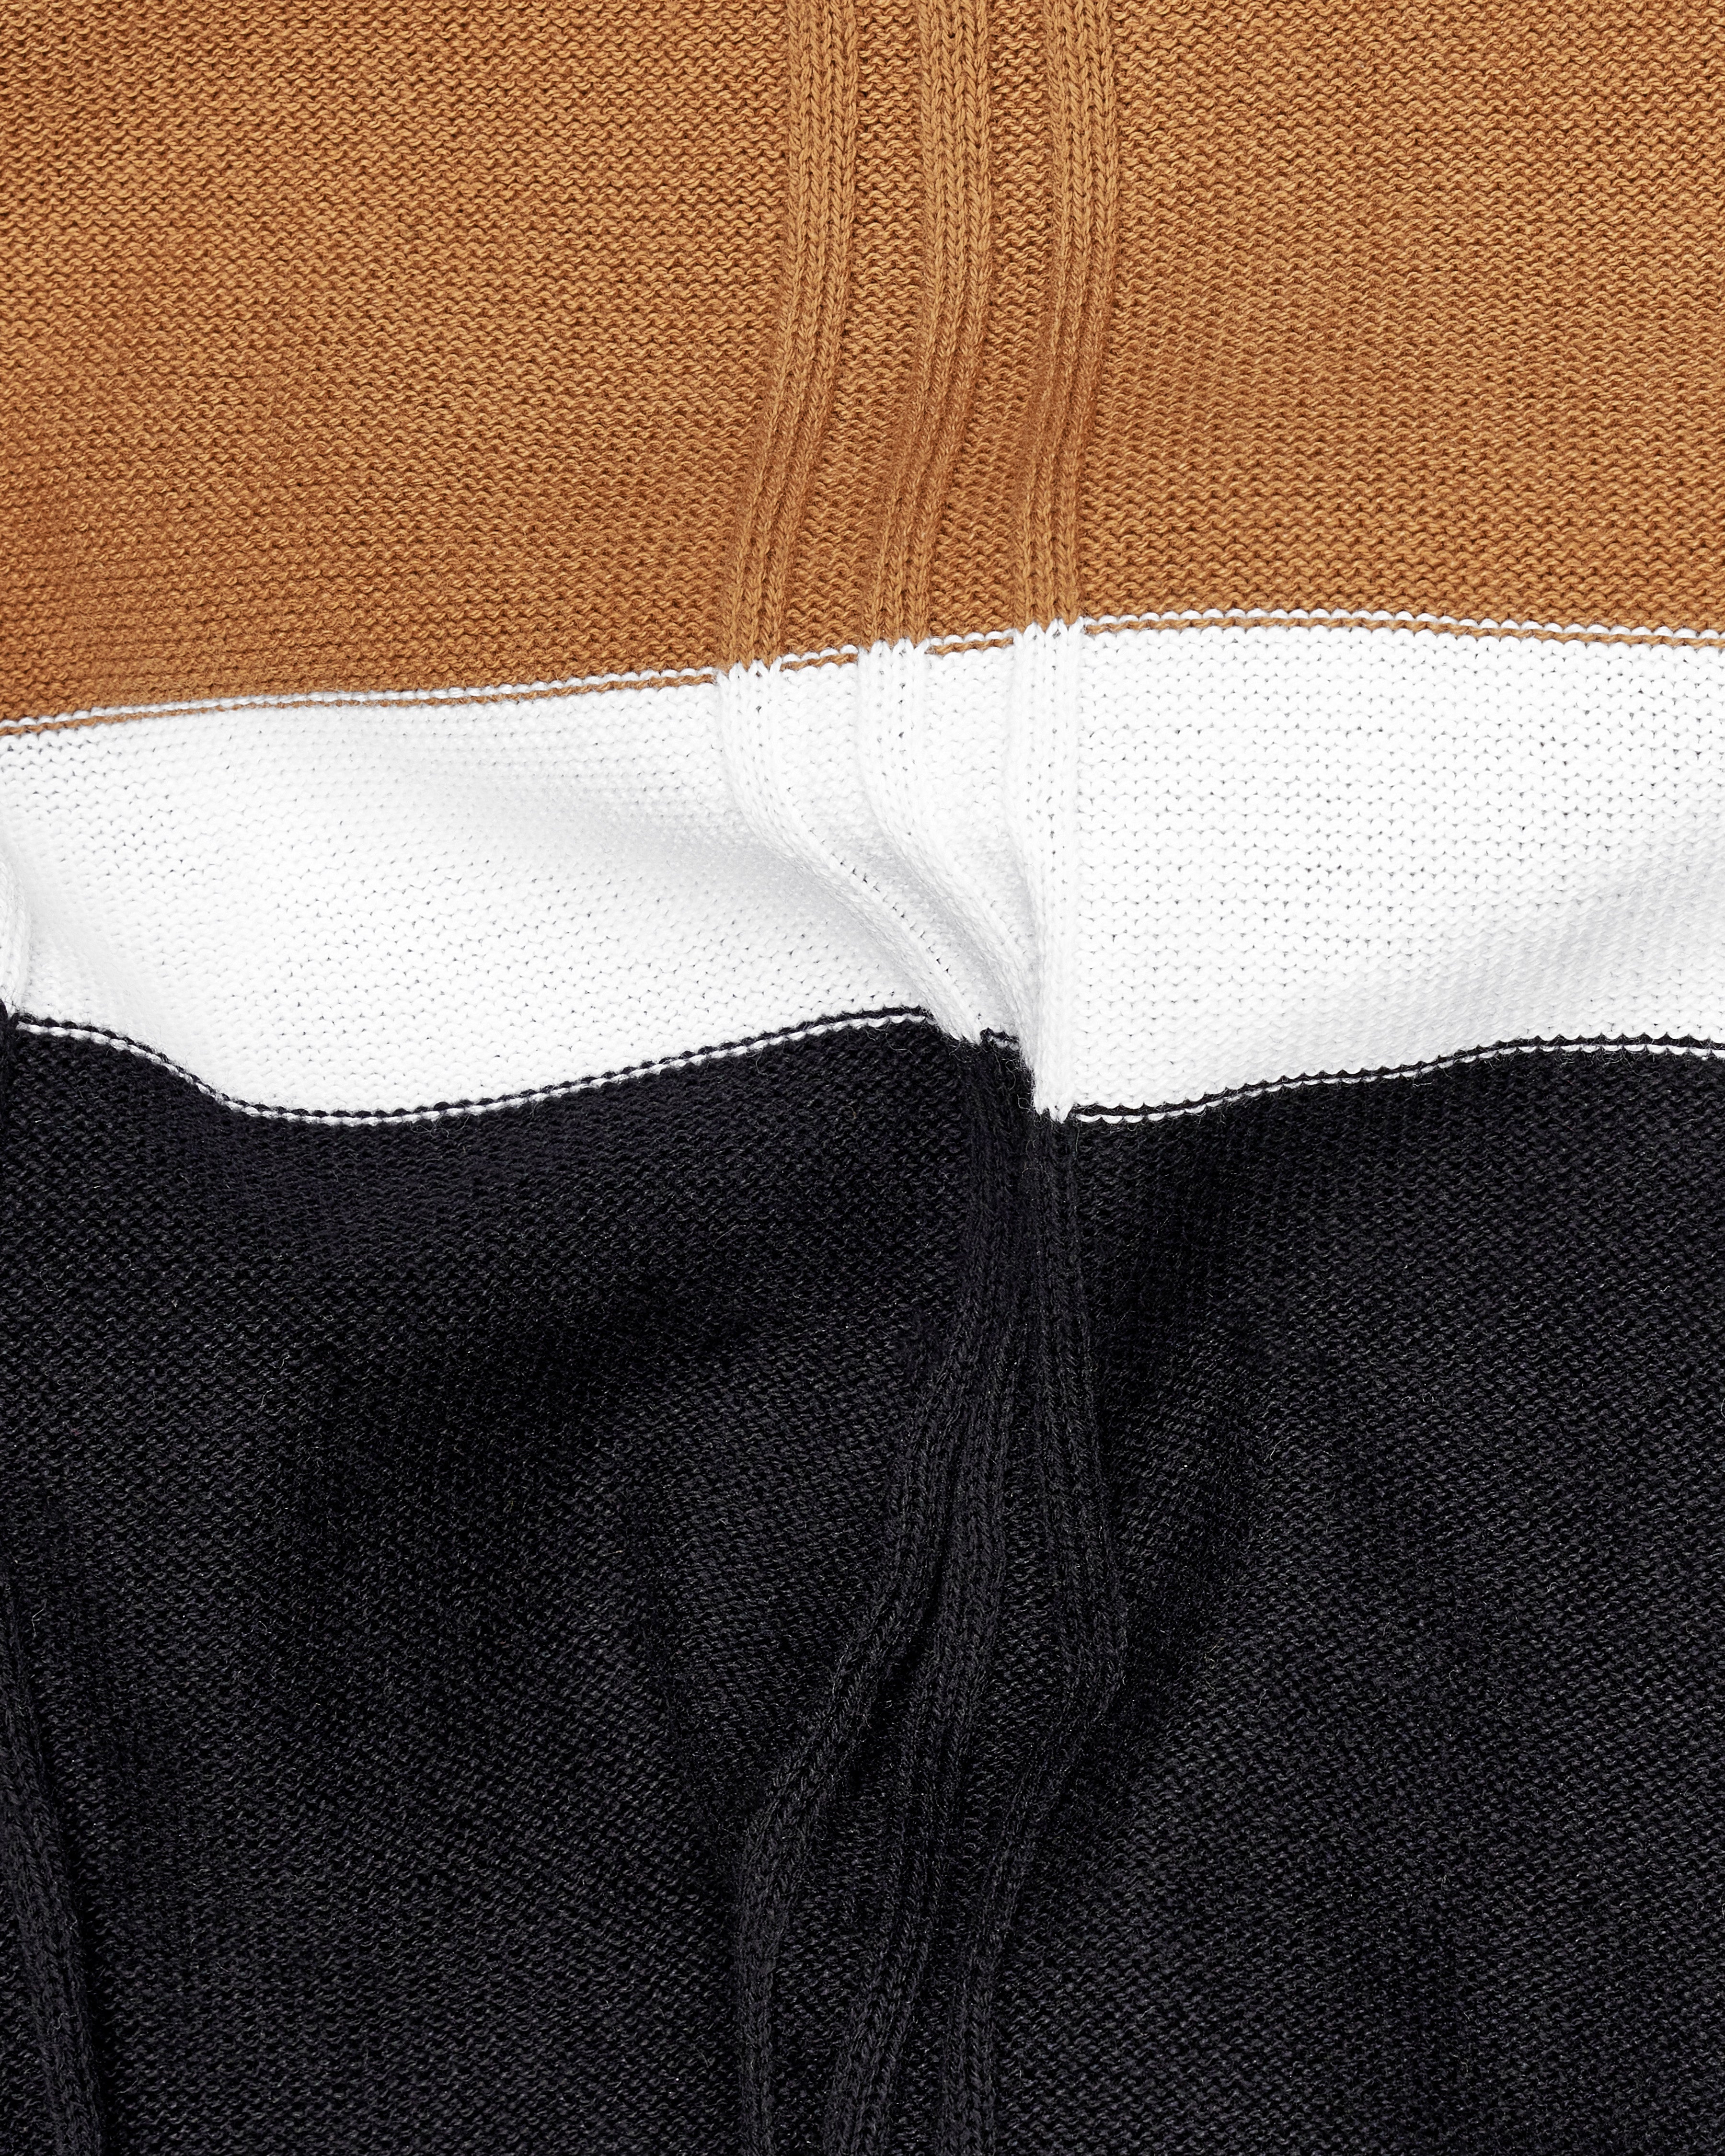 Palliest Brown With Black and White Block Pattern Premium Interlock Cotton Fabric Sweatshirt TS703-S, TS703-M, TS703-L, TS703-XL, TS703-XXL